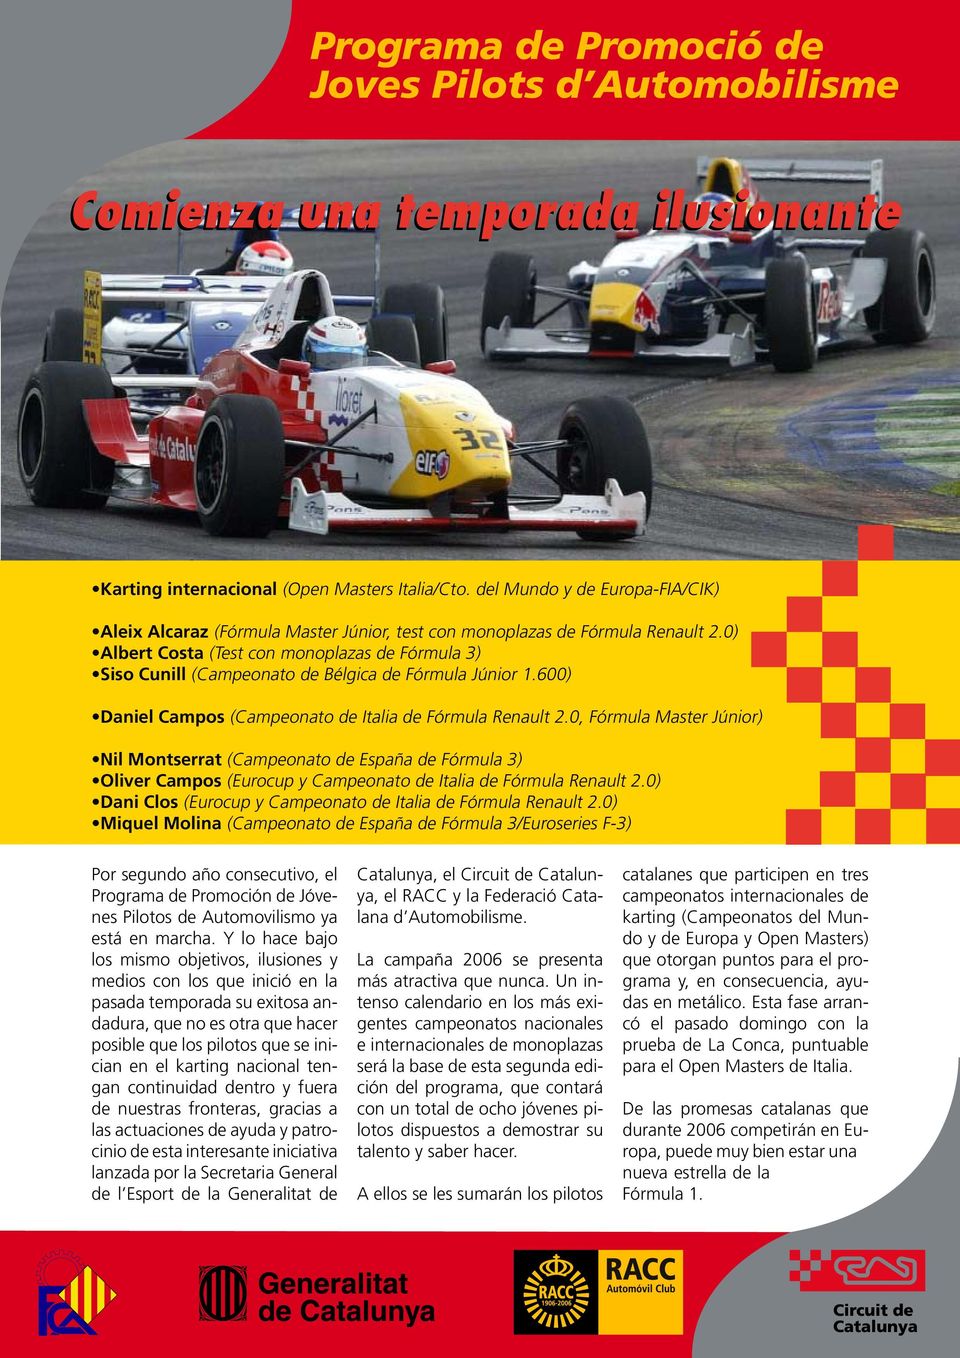 0, Fórmula Master Júnior) Nil Montserrat (Campeonato de España de Fórmula 3) Oliver Campos (Eurocup y Campeonato de Italia de Fórmula Renault 2.